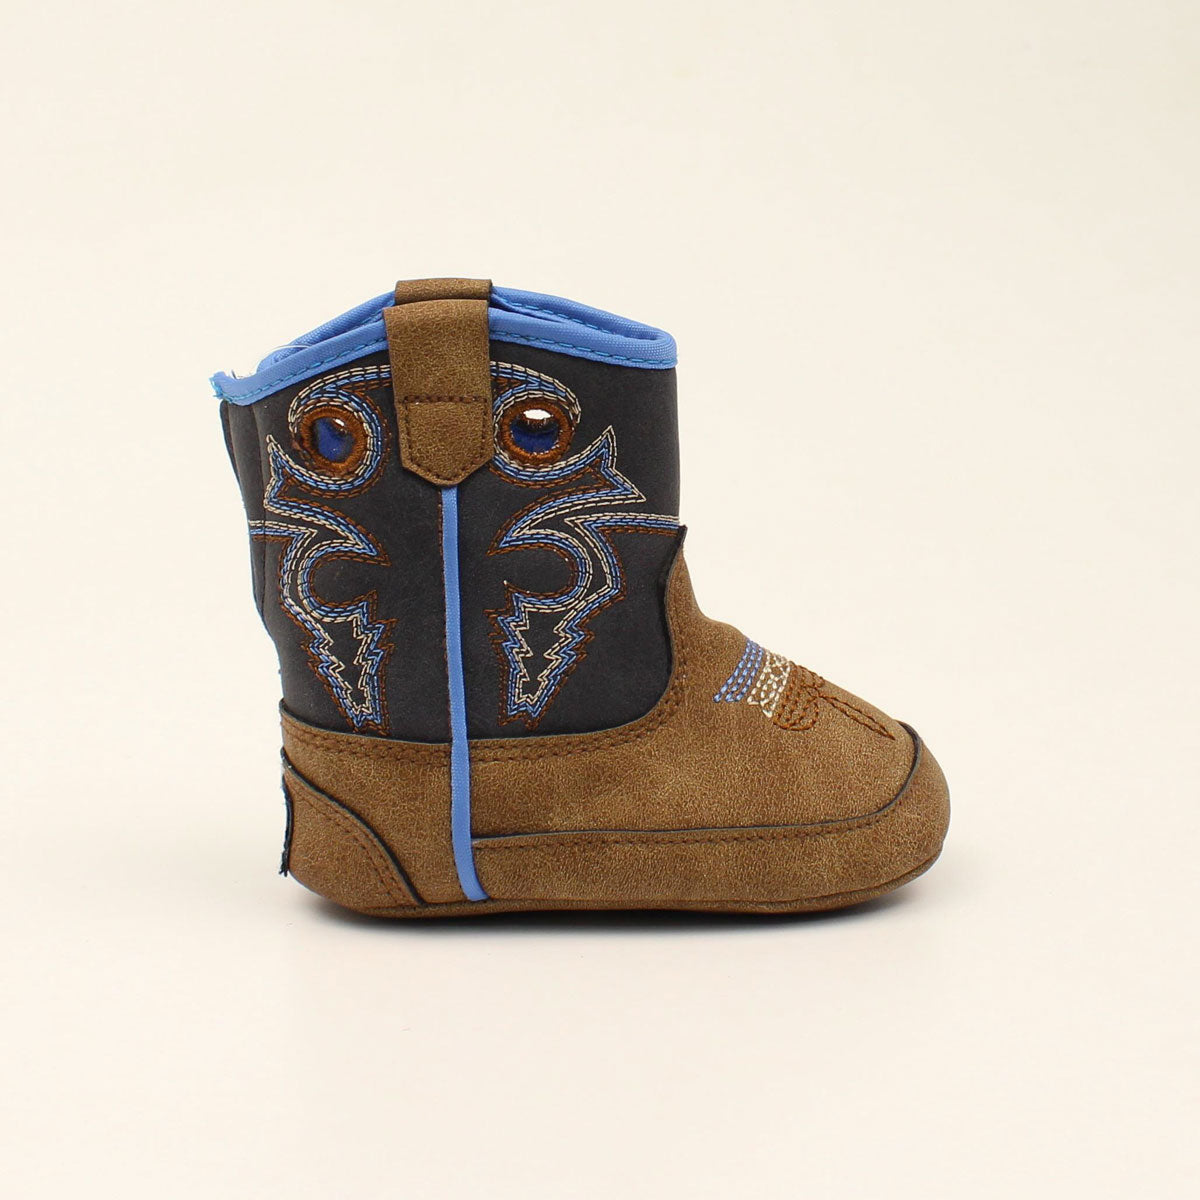 M & F Products "Ben" Baby Bucker Boot